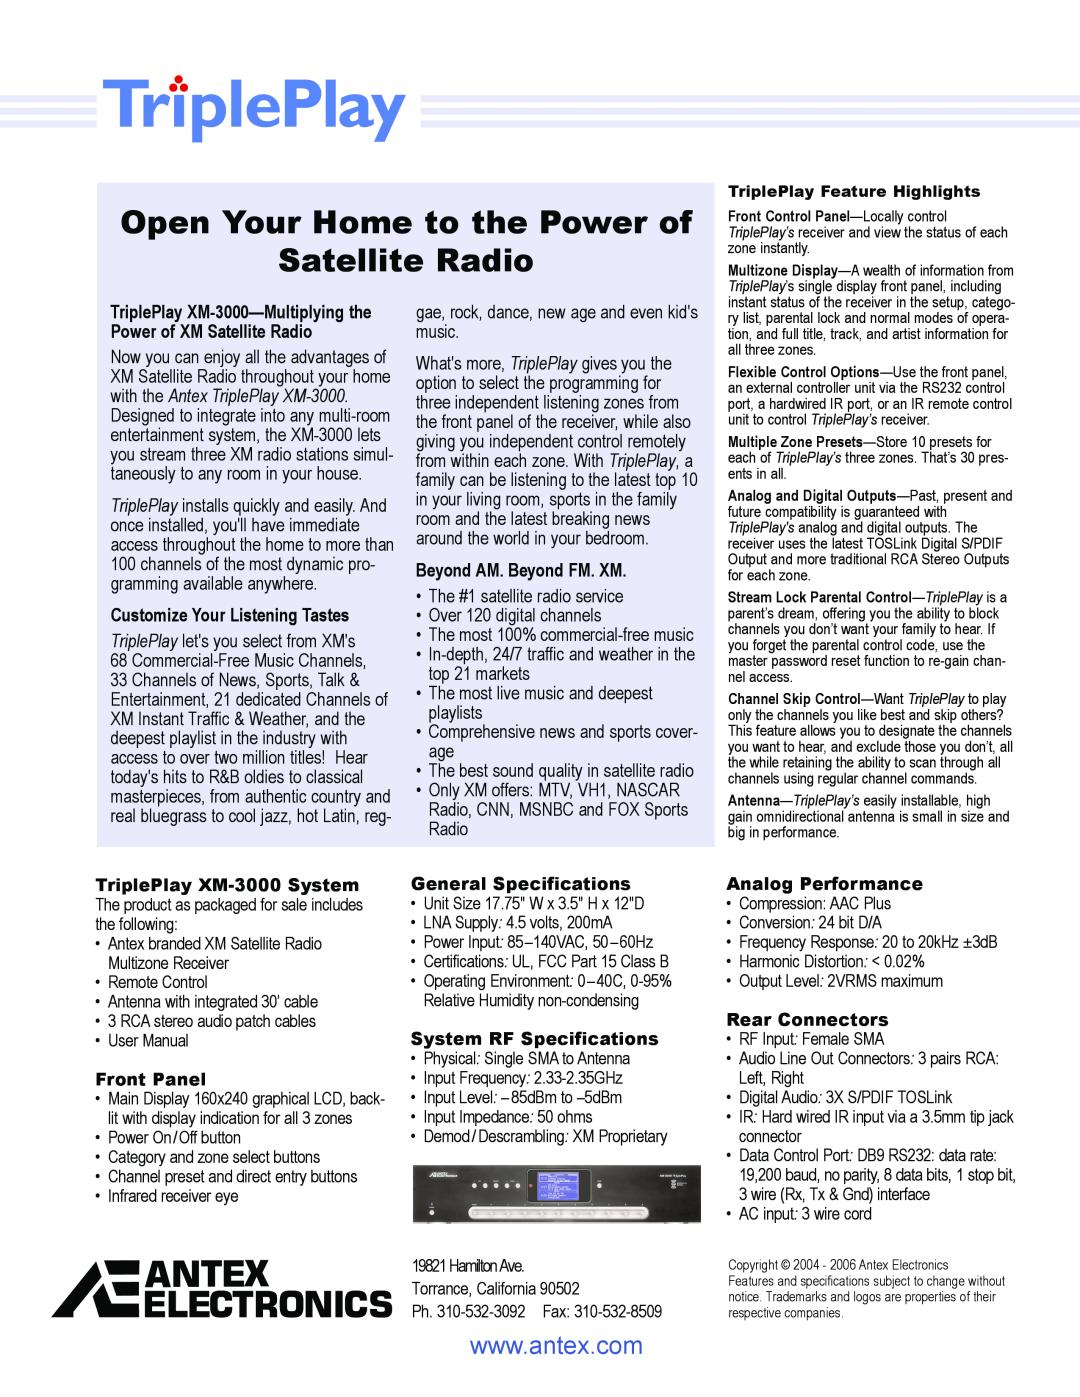 Antex electronic Satellite Radio Multizone Receiver manual Open Your Home to the Power of Satellite Radio 